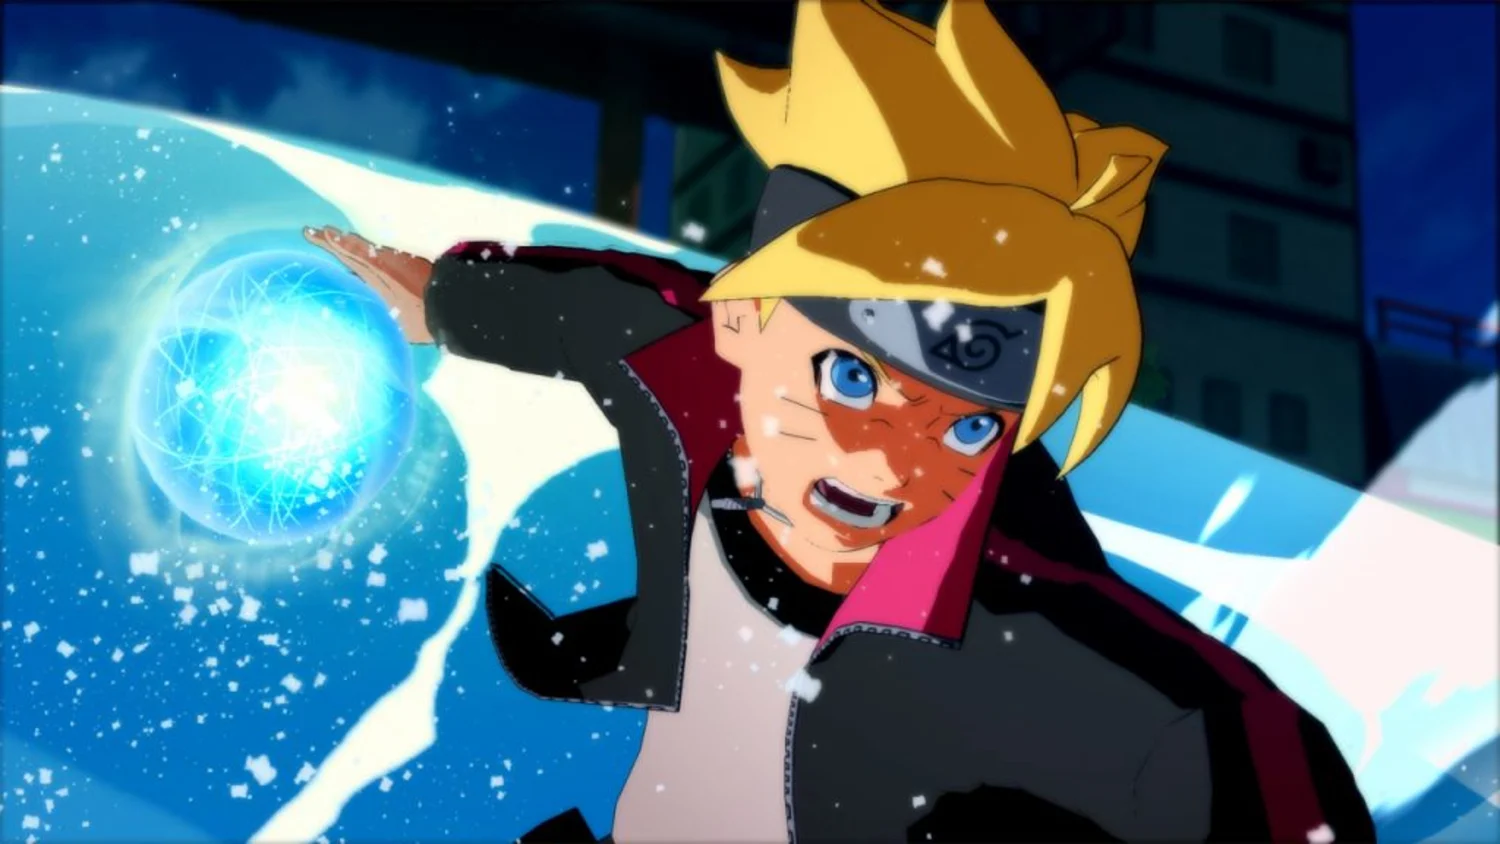 Jogo Naruto Shippuden Ultimate Ninja Storm 4 Road To Boruto Ps4